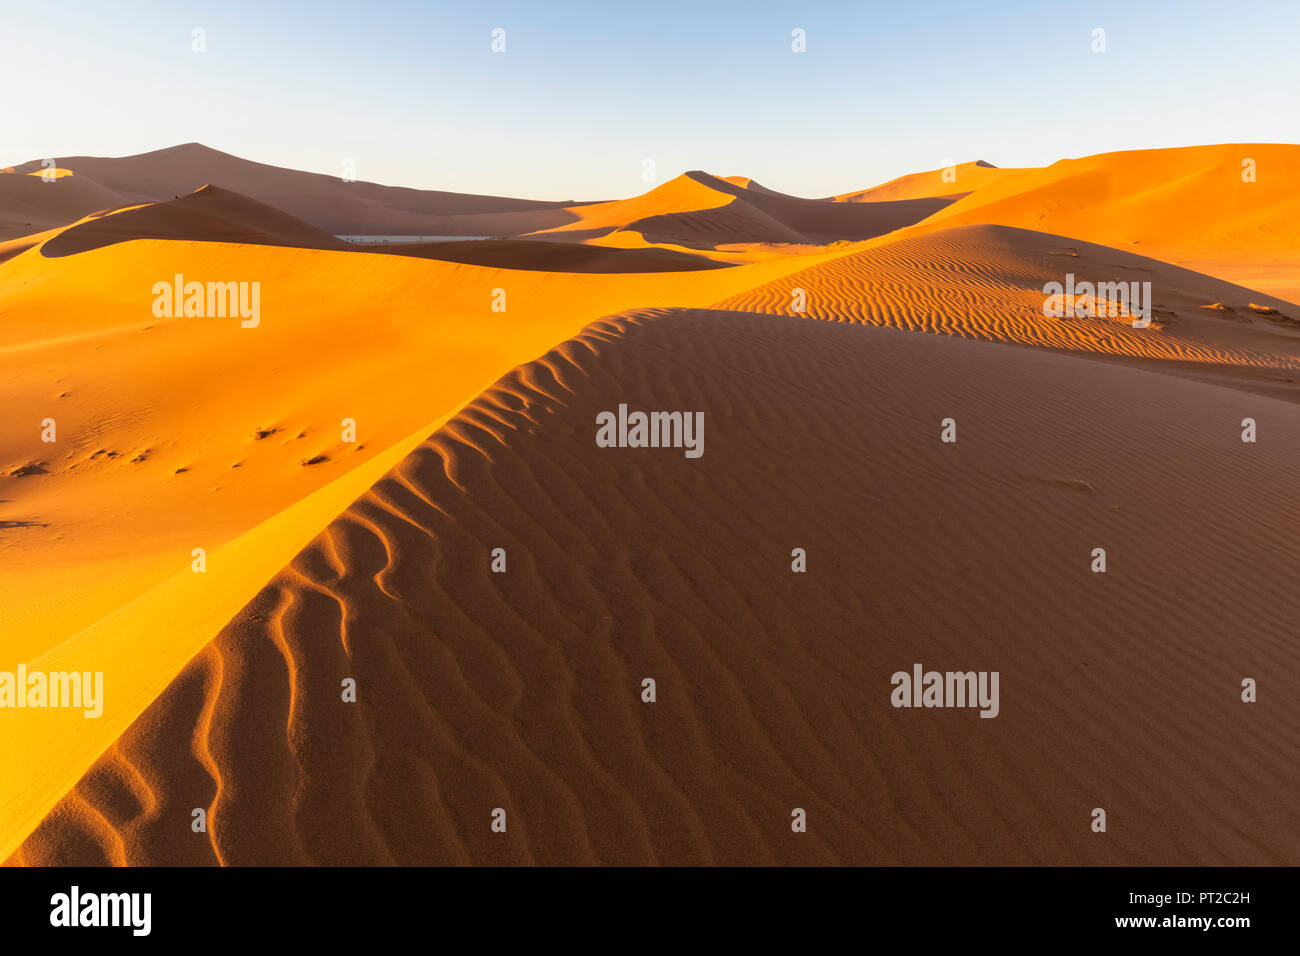 Afrika, Namibia, Namib, Naukluft National Park, Dead Vlei und Sand dune 'Big Daddy' Stockfoto